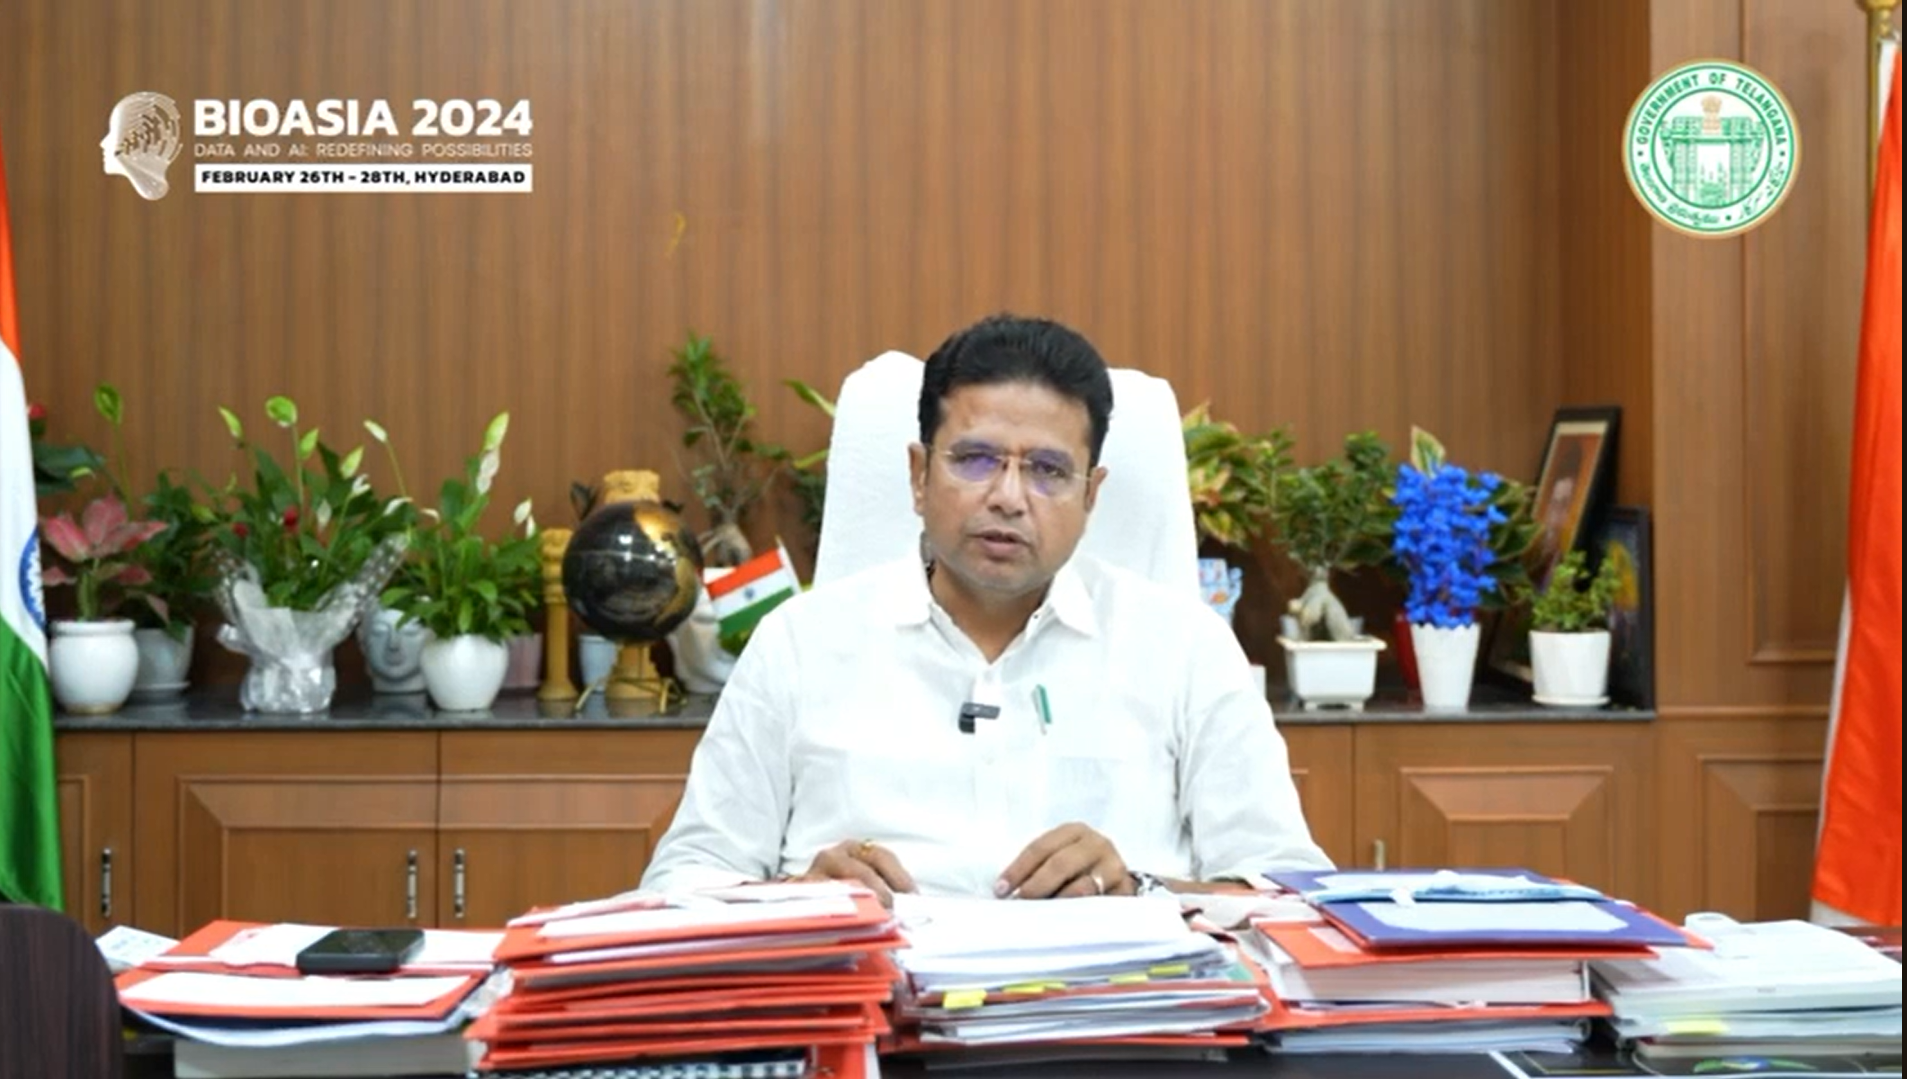 Industries Minister Sri Sridhar Babu's welcome message-BioAsia 2024